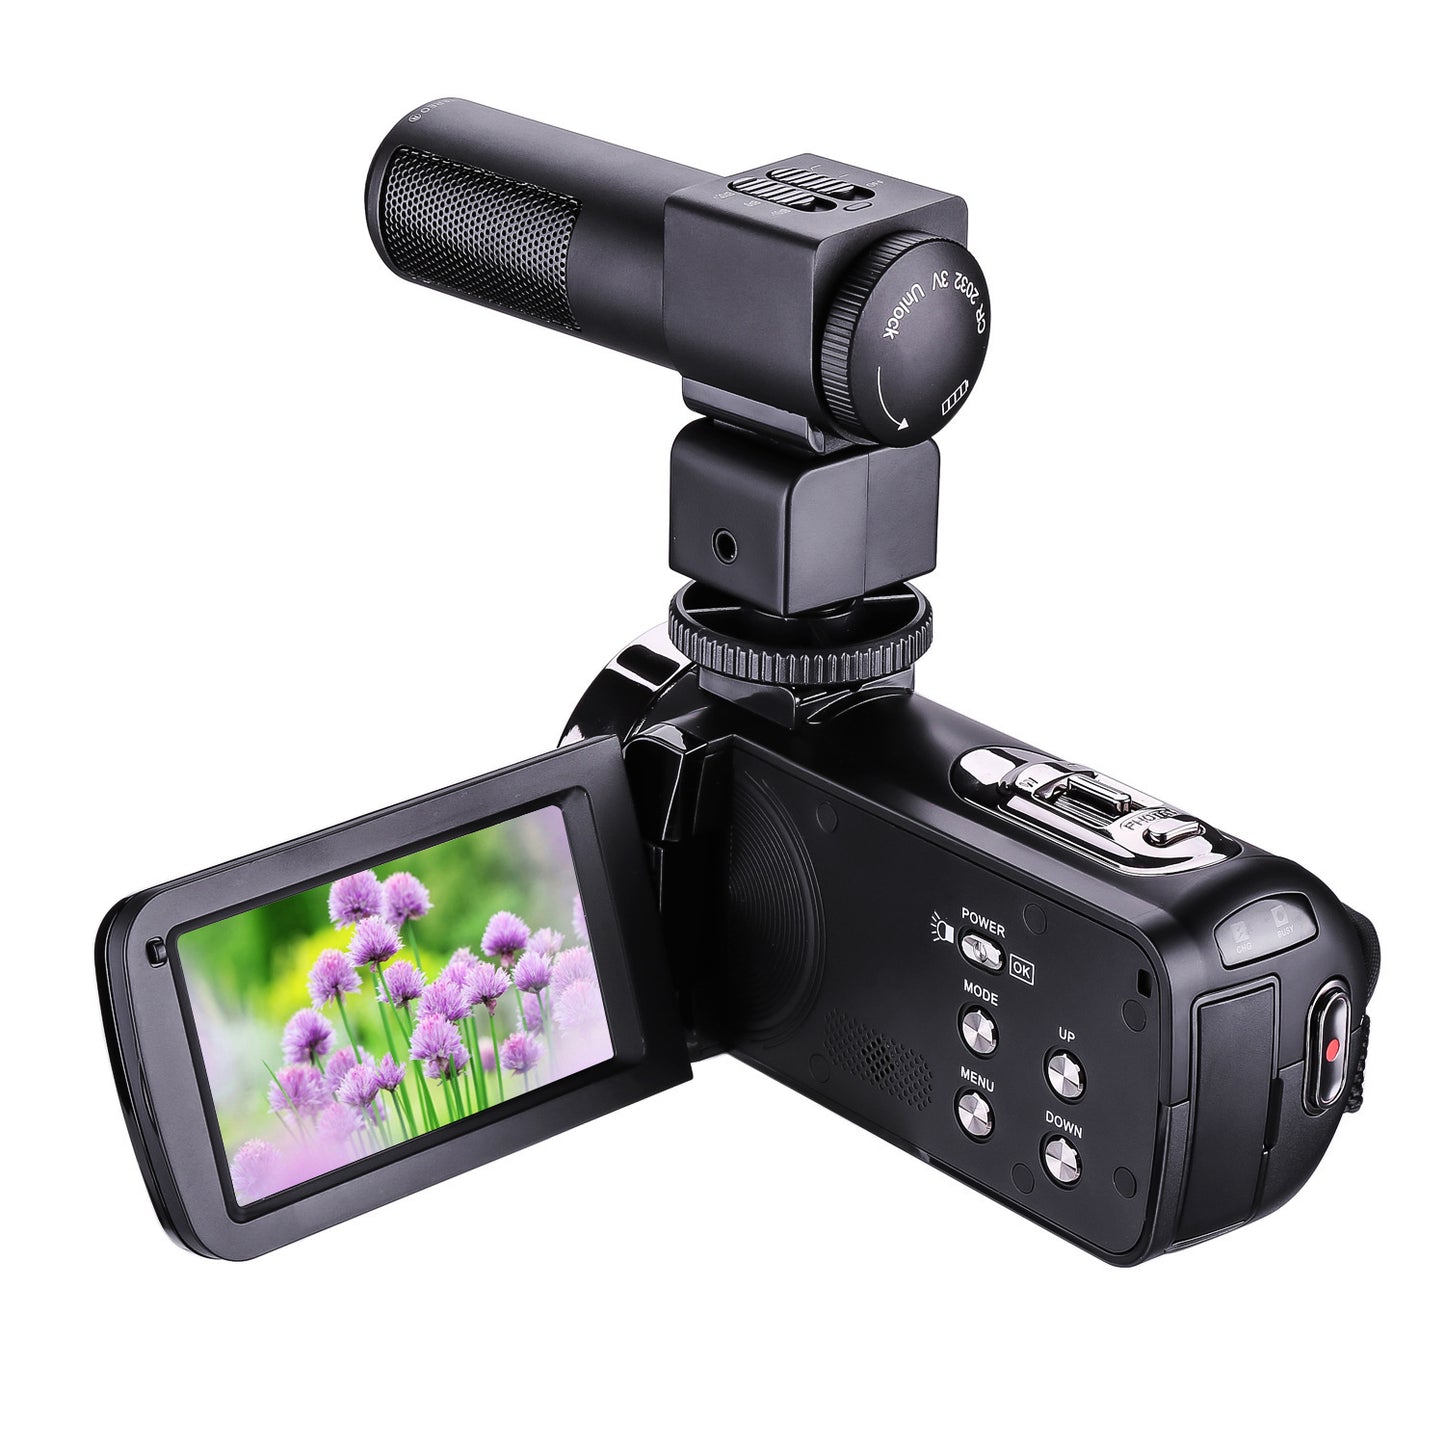 HDV-301STRM HD camera